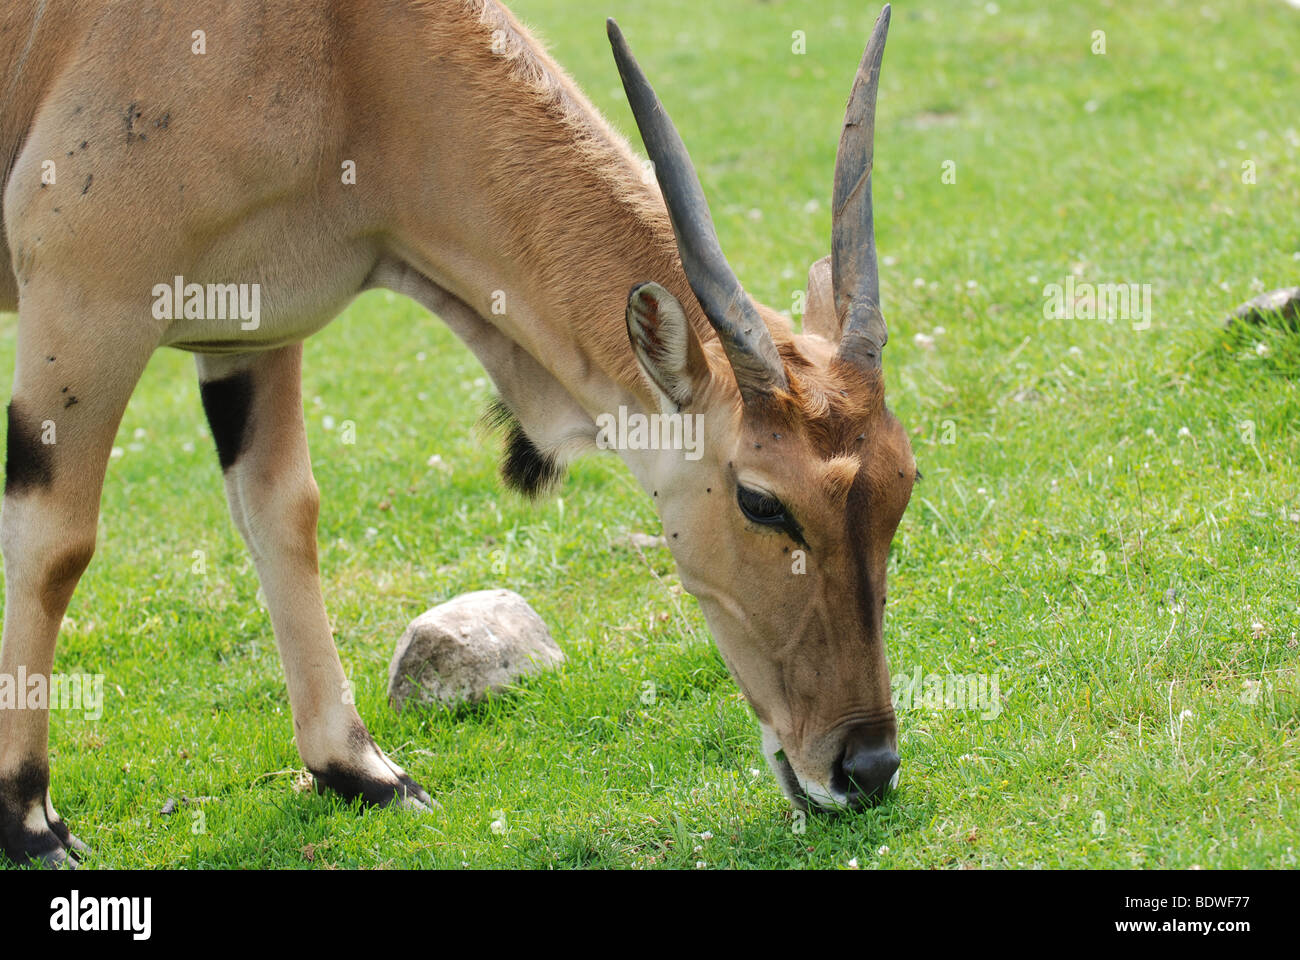 Eland antelope Stock Photo